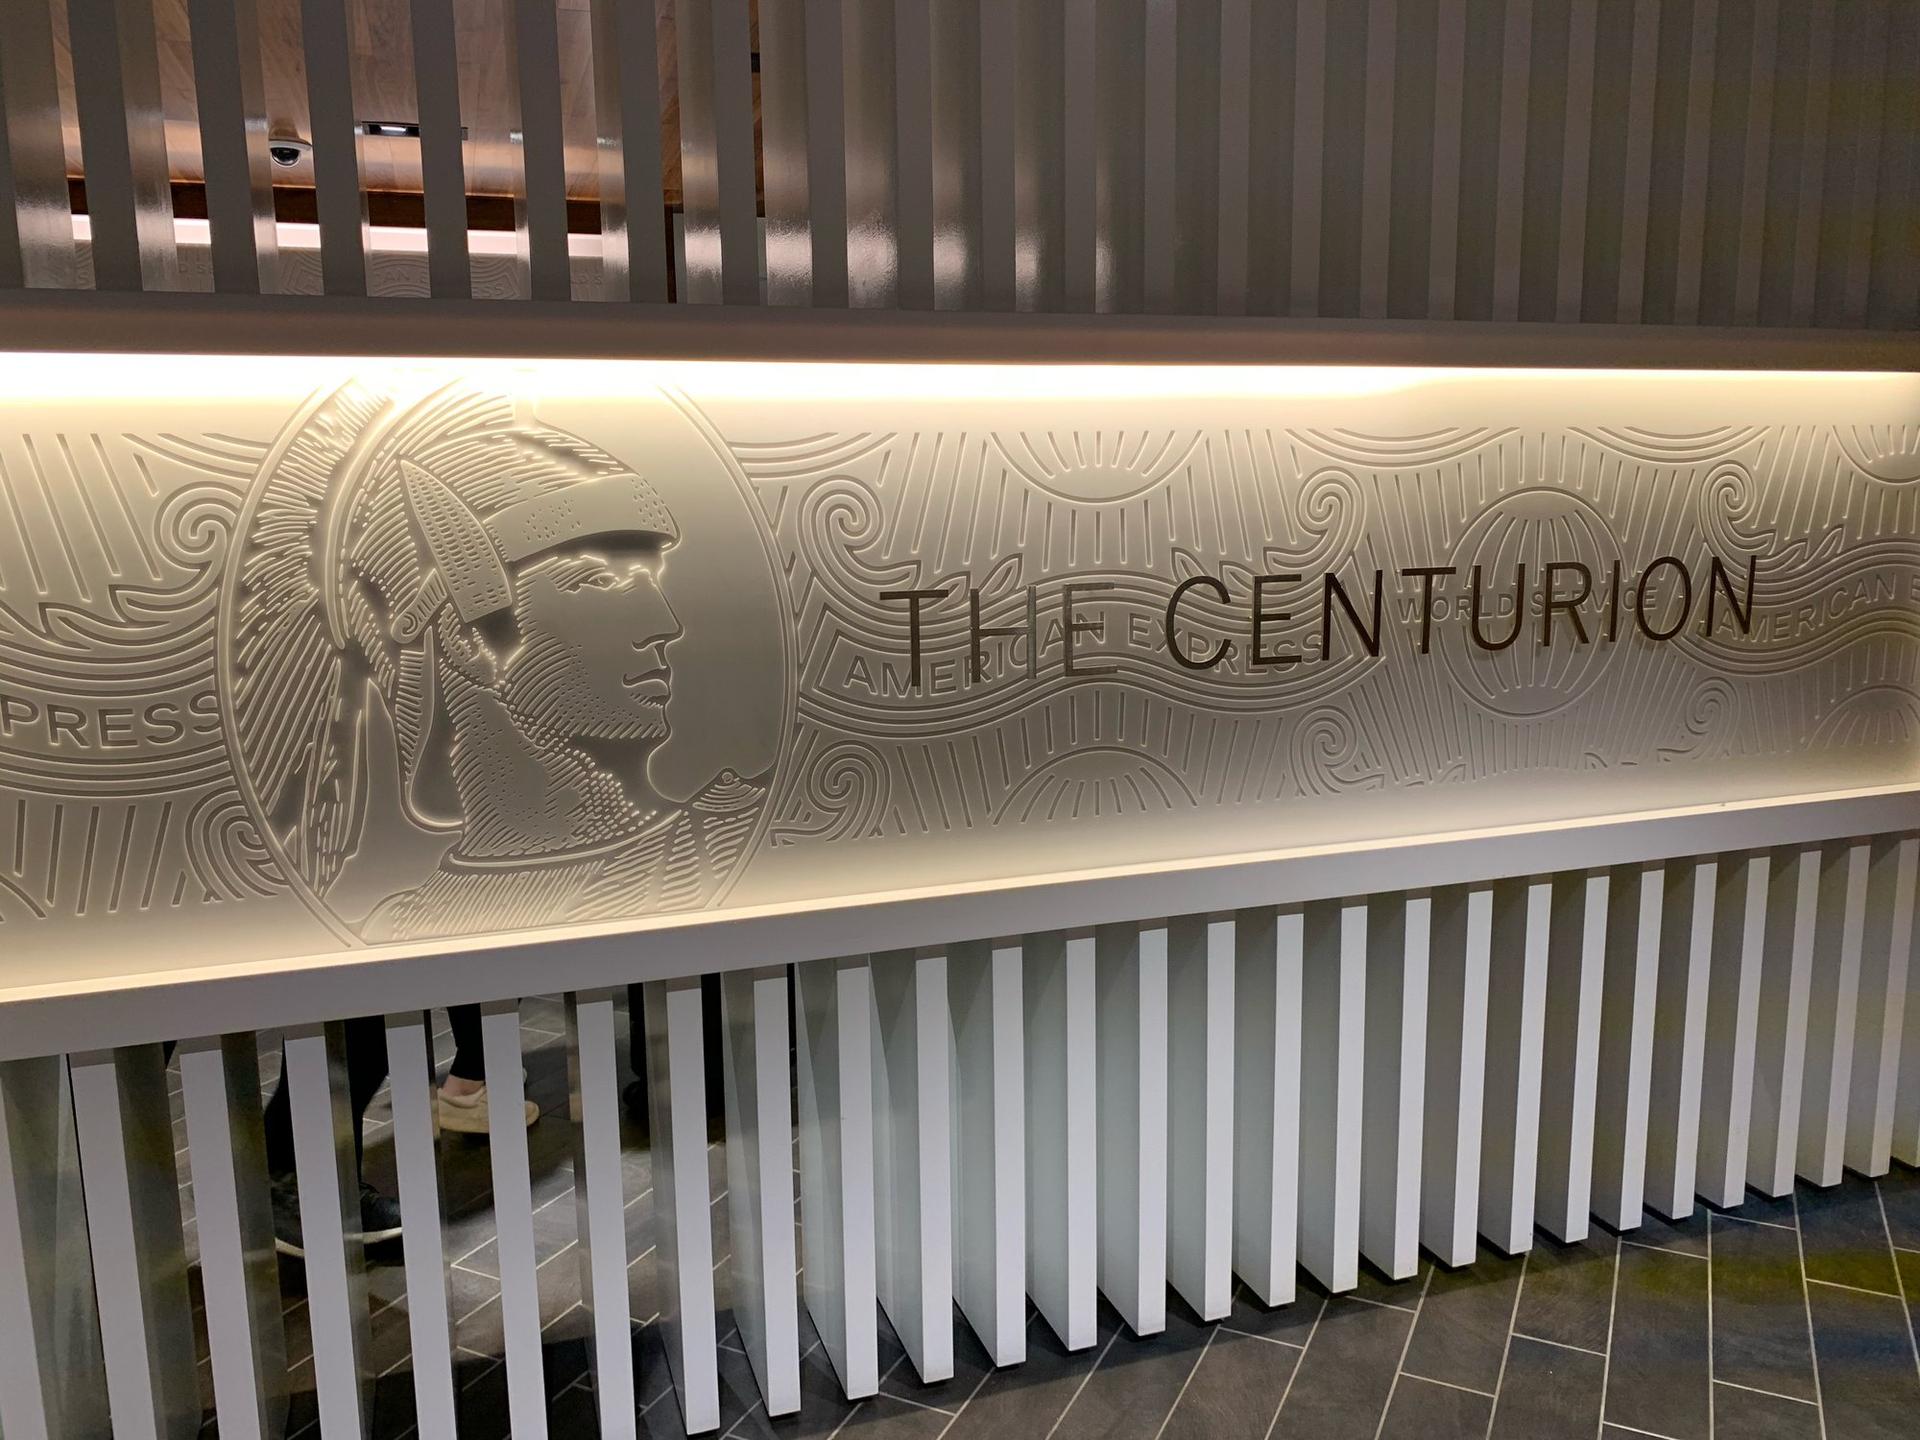 The Centurion Lounge image 17 of 41